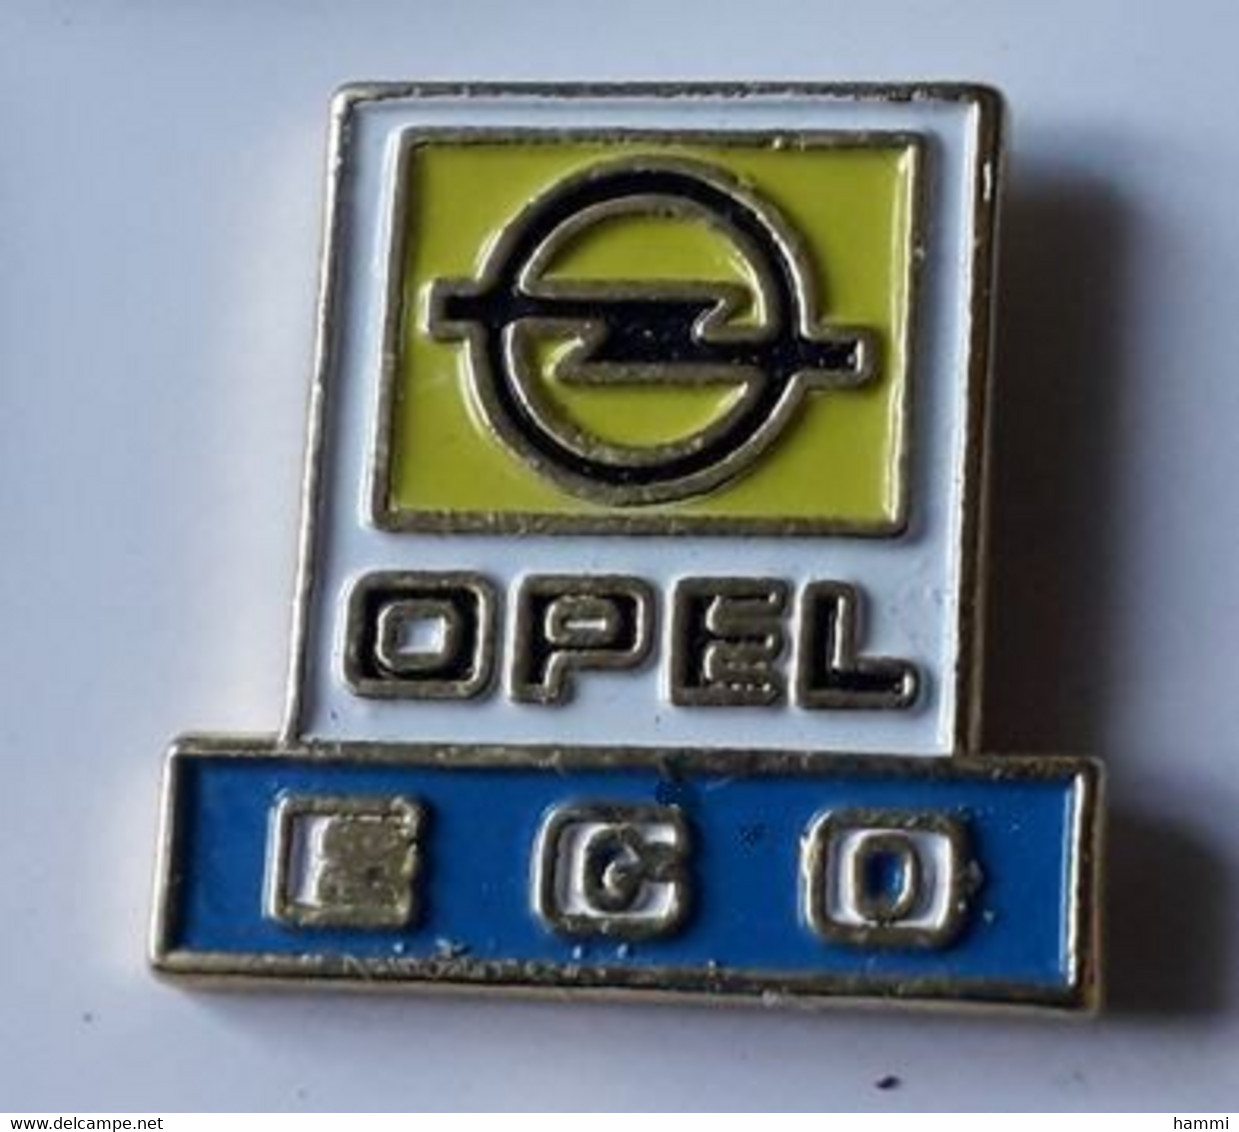 AN209 Pin's OPEL ECO - Opel